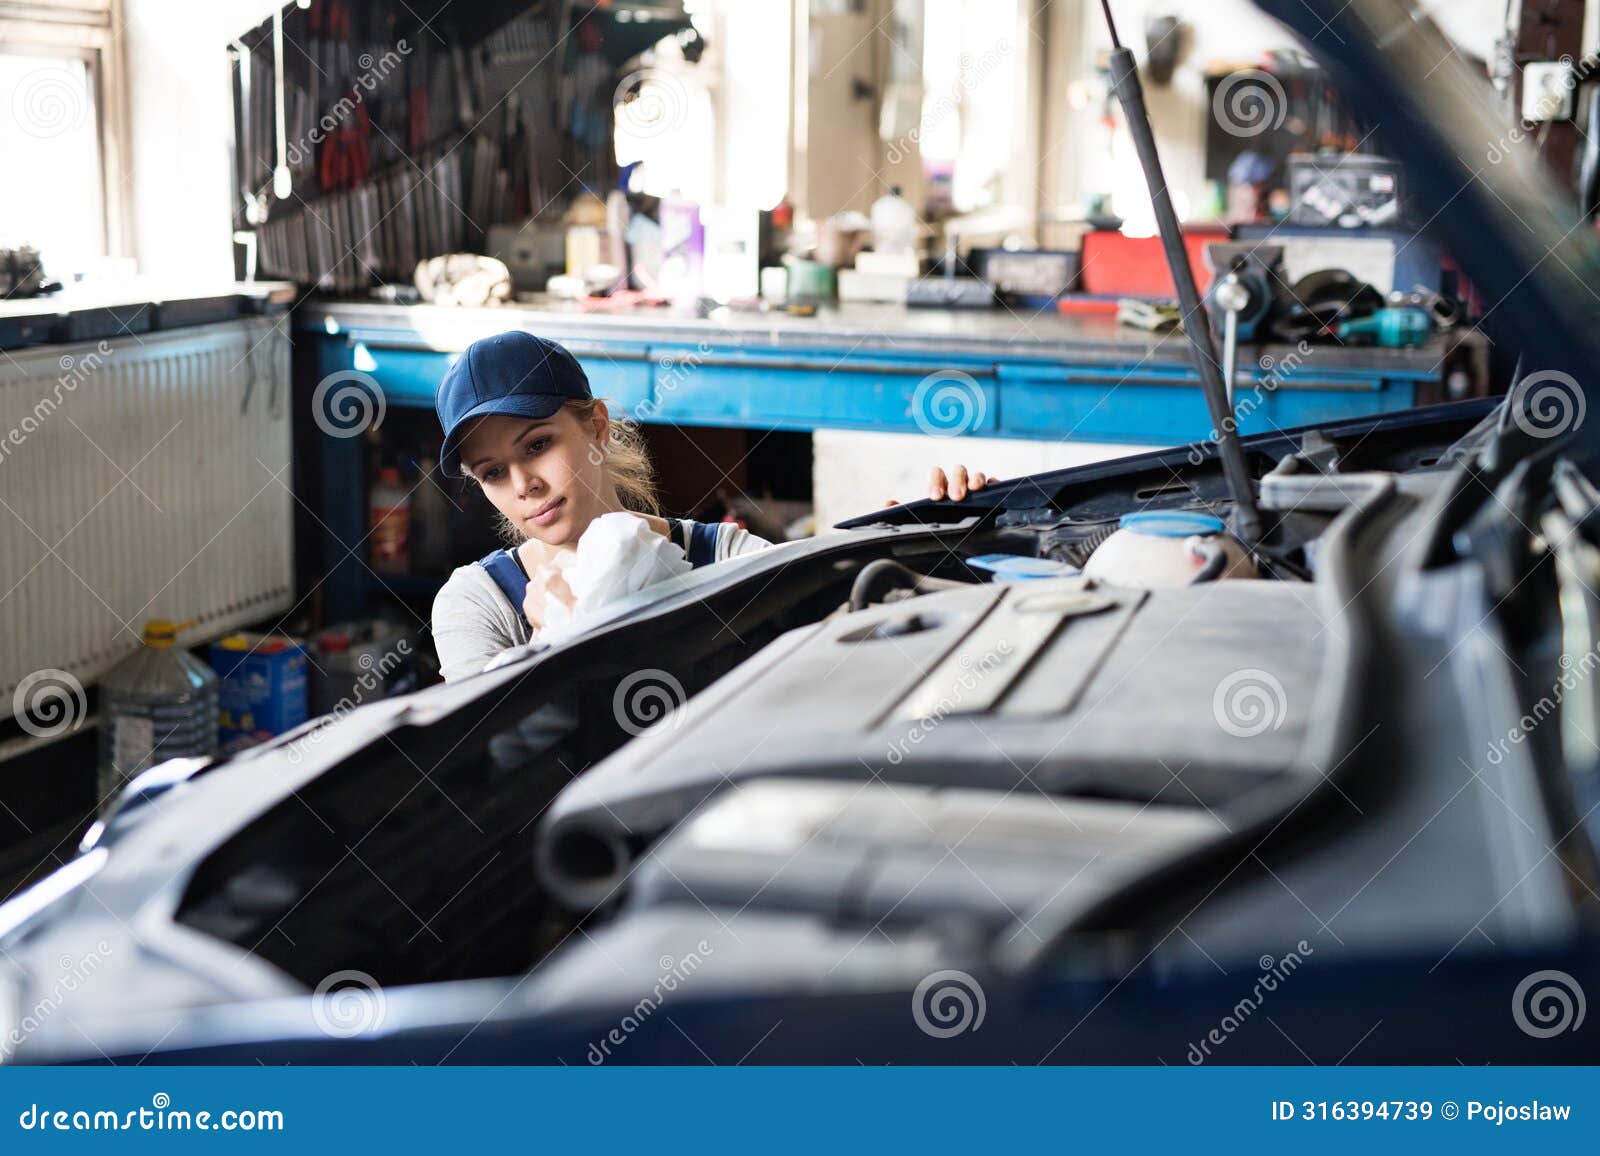 female auto mechanic repairing, maintaining car. beautiful woman working in a garage, wearing blue coveralls.